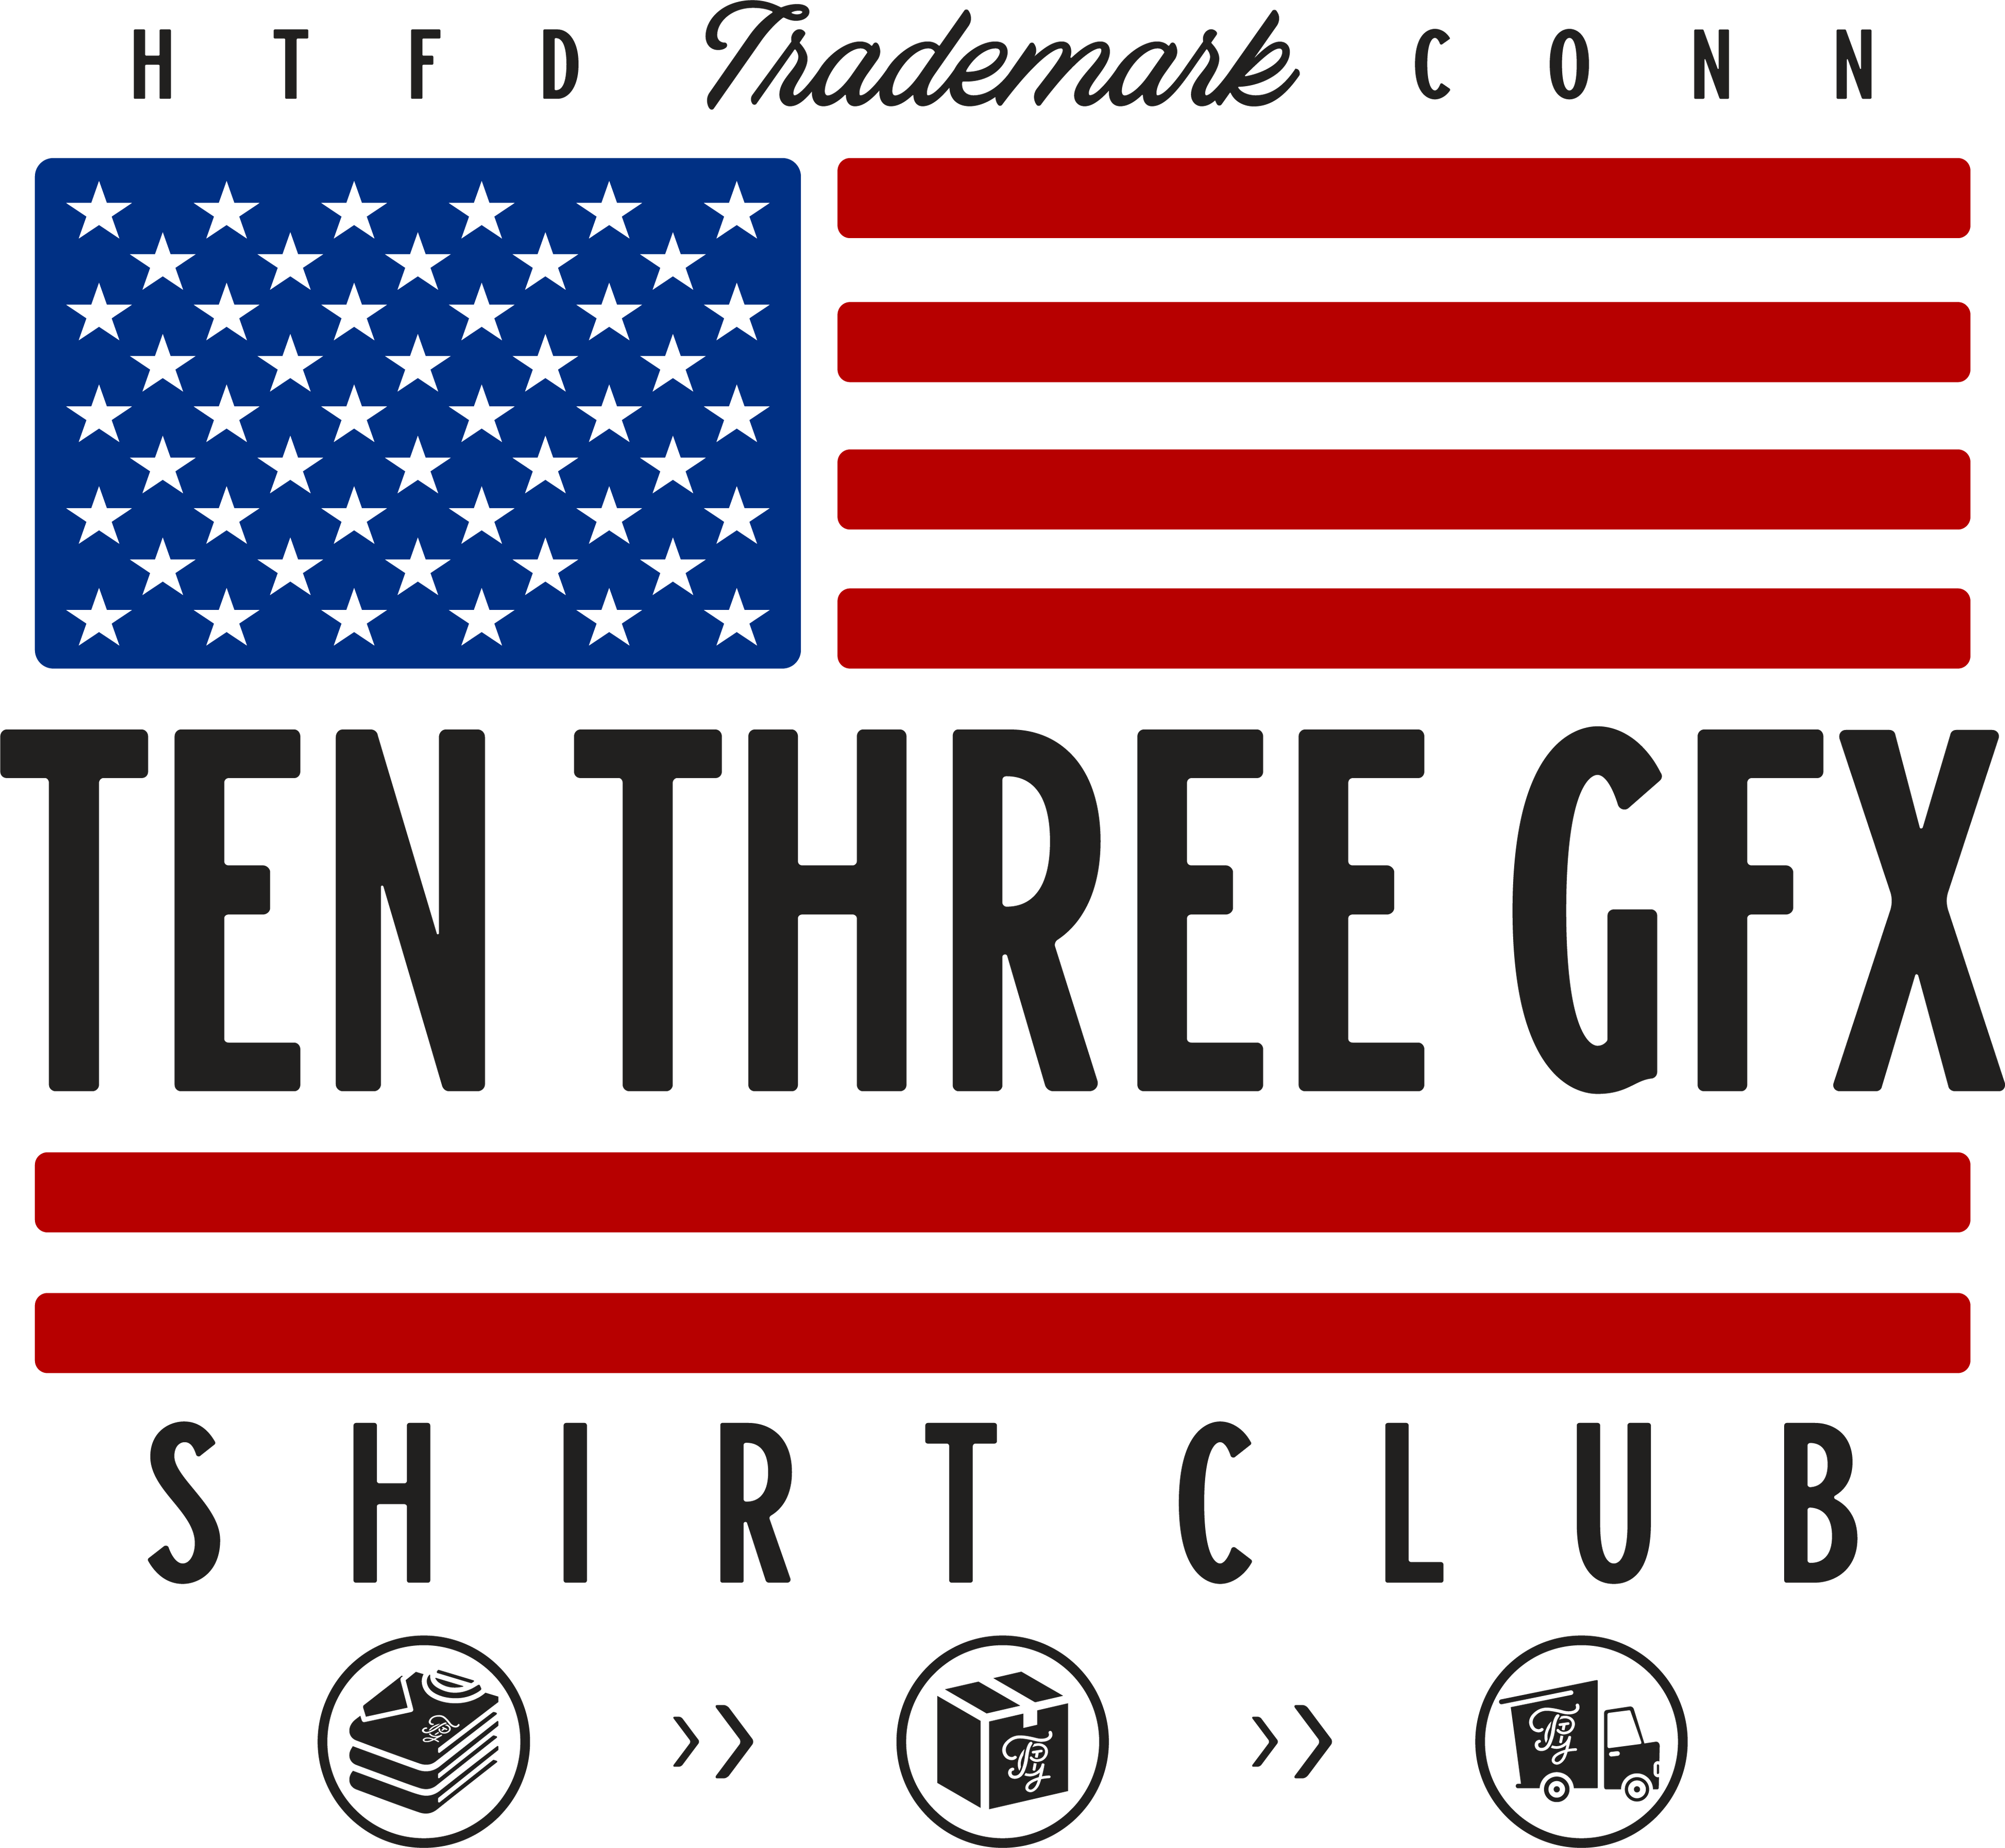 Ten Three GFX Shirt Club - Small